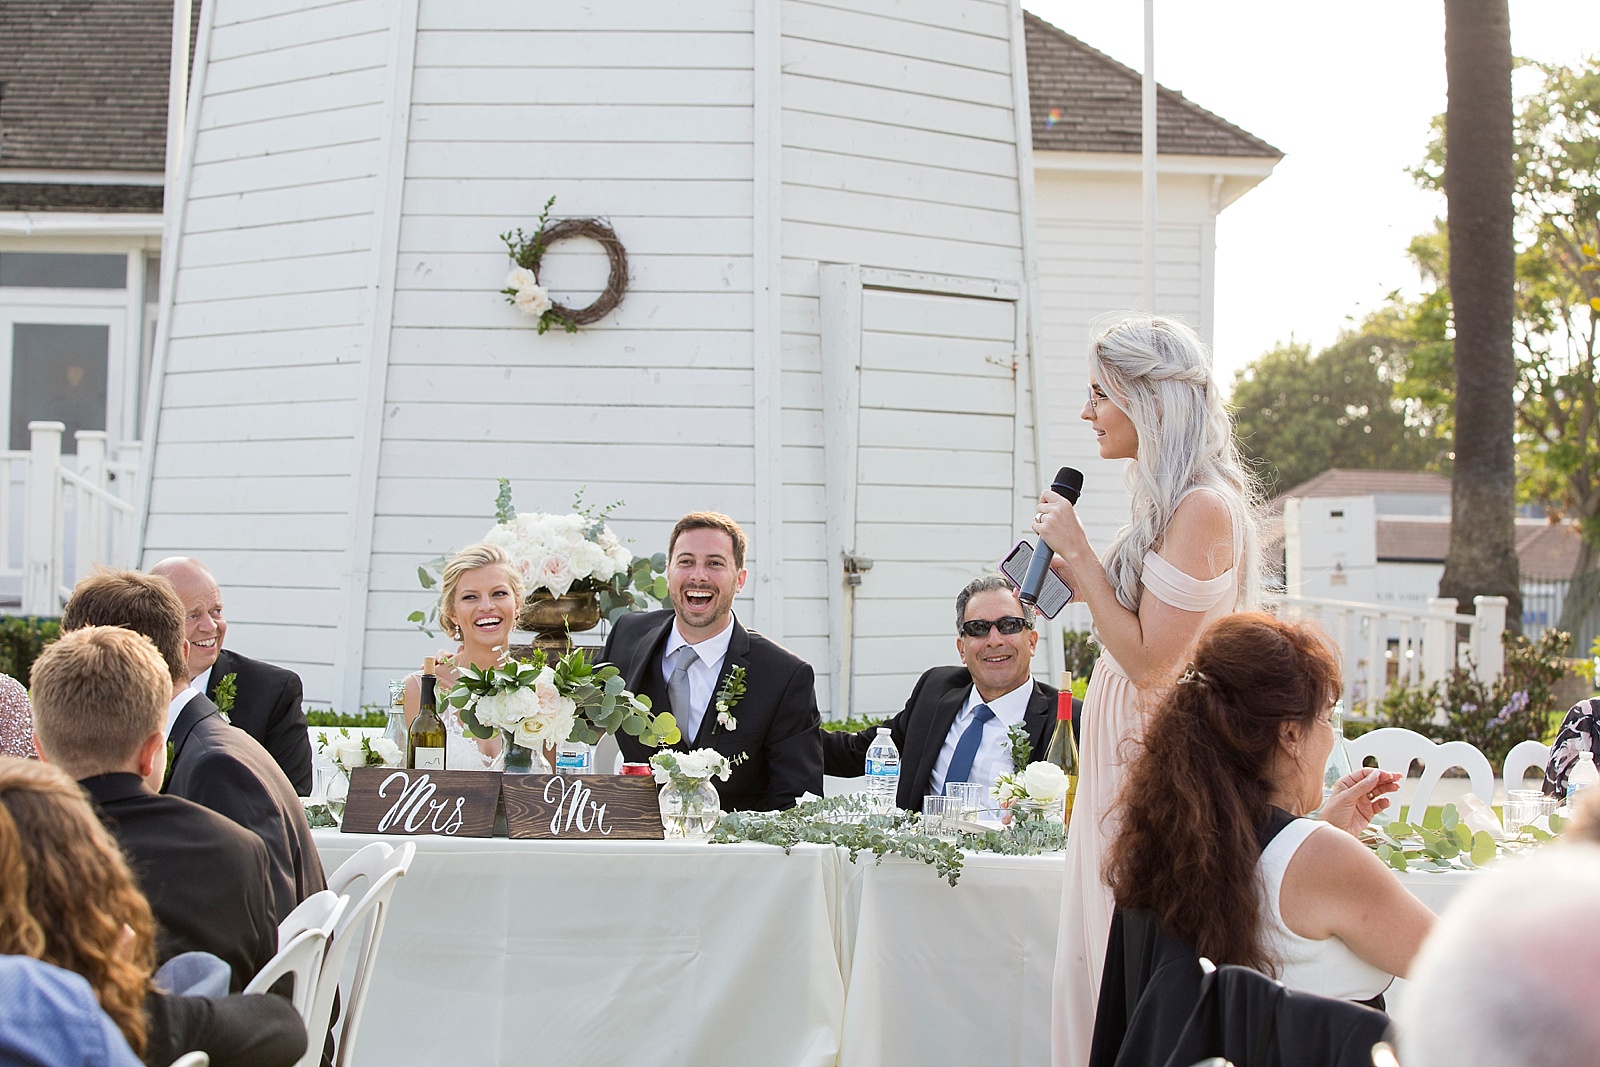 Huntington Beach wedding day photographed by Randi Michelle Photography